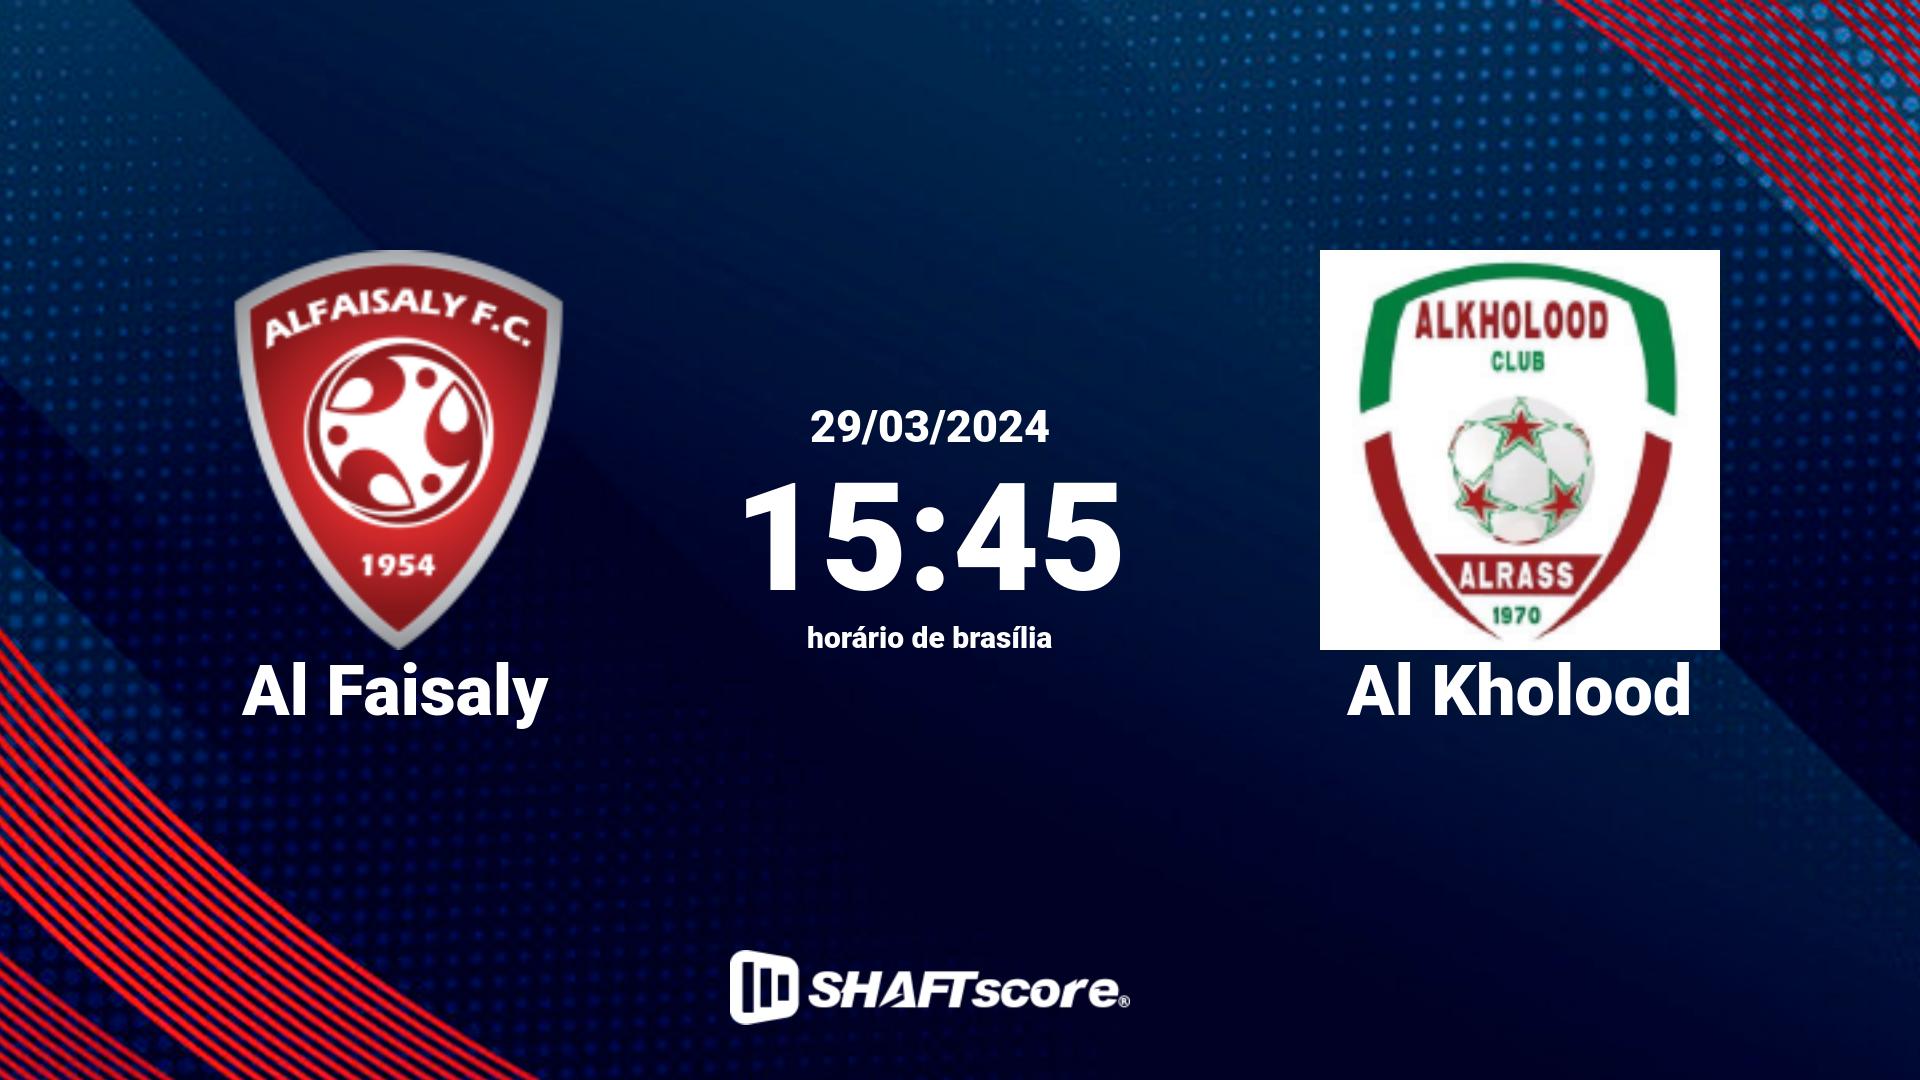 Estatísticas do jogo Al Faisaly vs Al Kholood 29.03 15:45